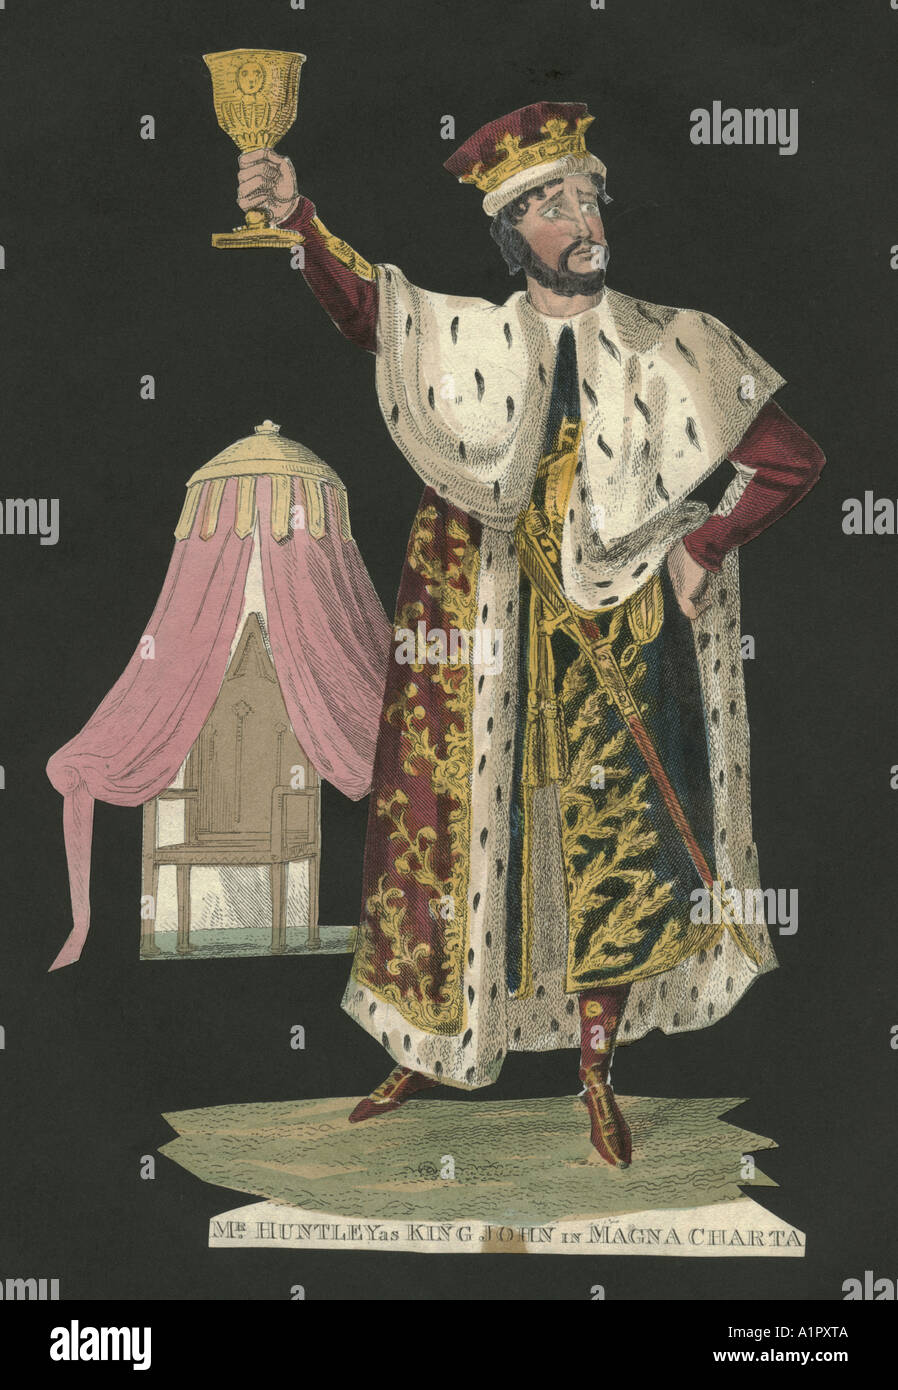 Theatrical portrait of Mr Huntley as King John in Magna Charta circa 1830 Stock Photo